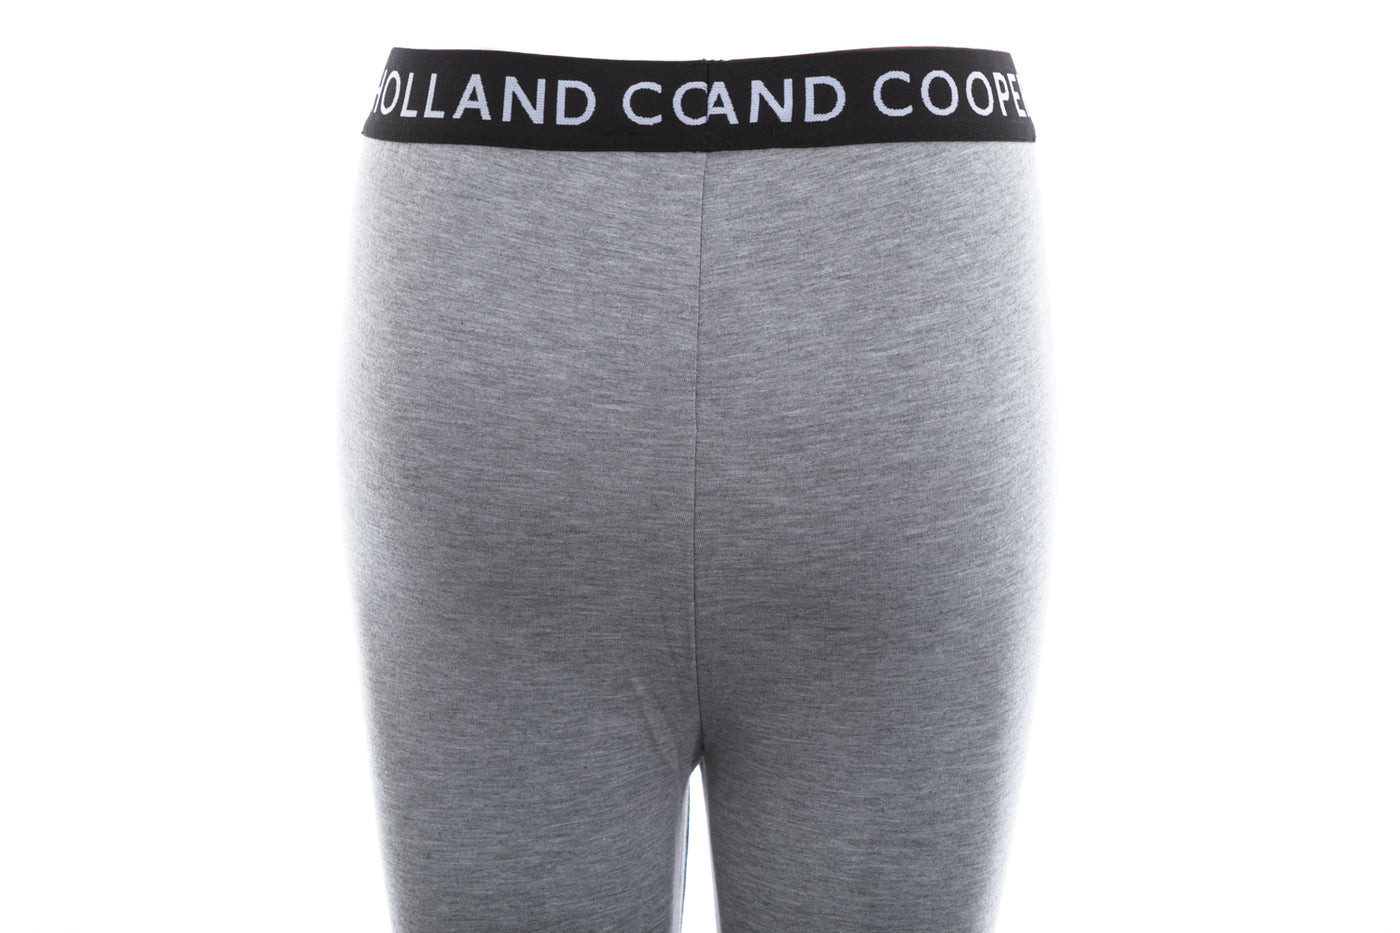 Holland Cooper Ladies Lounge Legging in Light Grey Marle